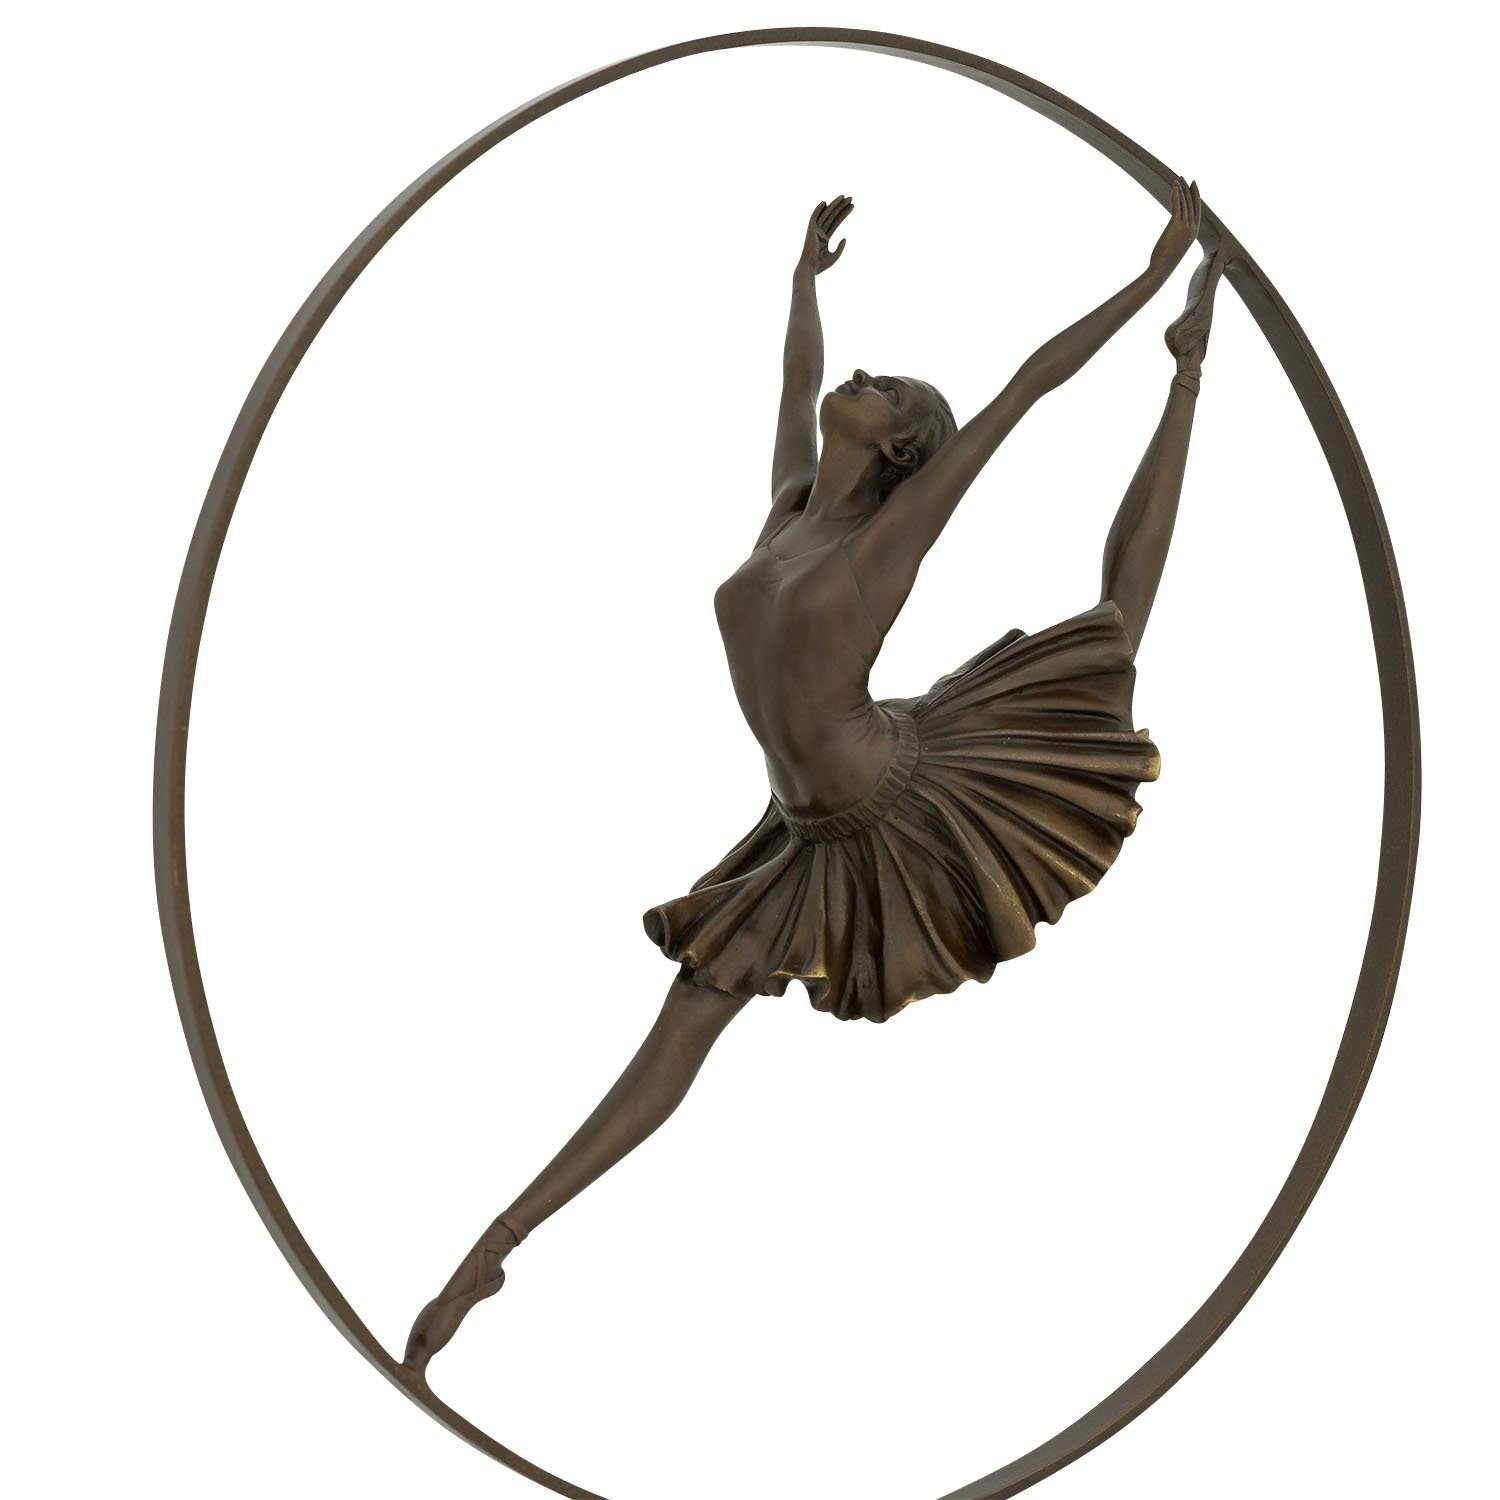 Aubaho Skulptur Bronzeskulptur Tänzerin Ballerina Antik-Stil mit Figur Reif Bronze Sta